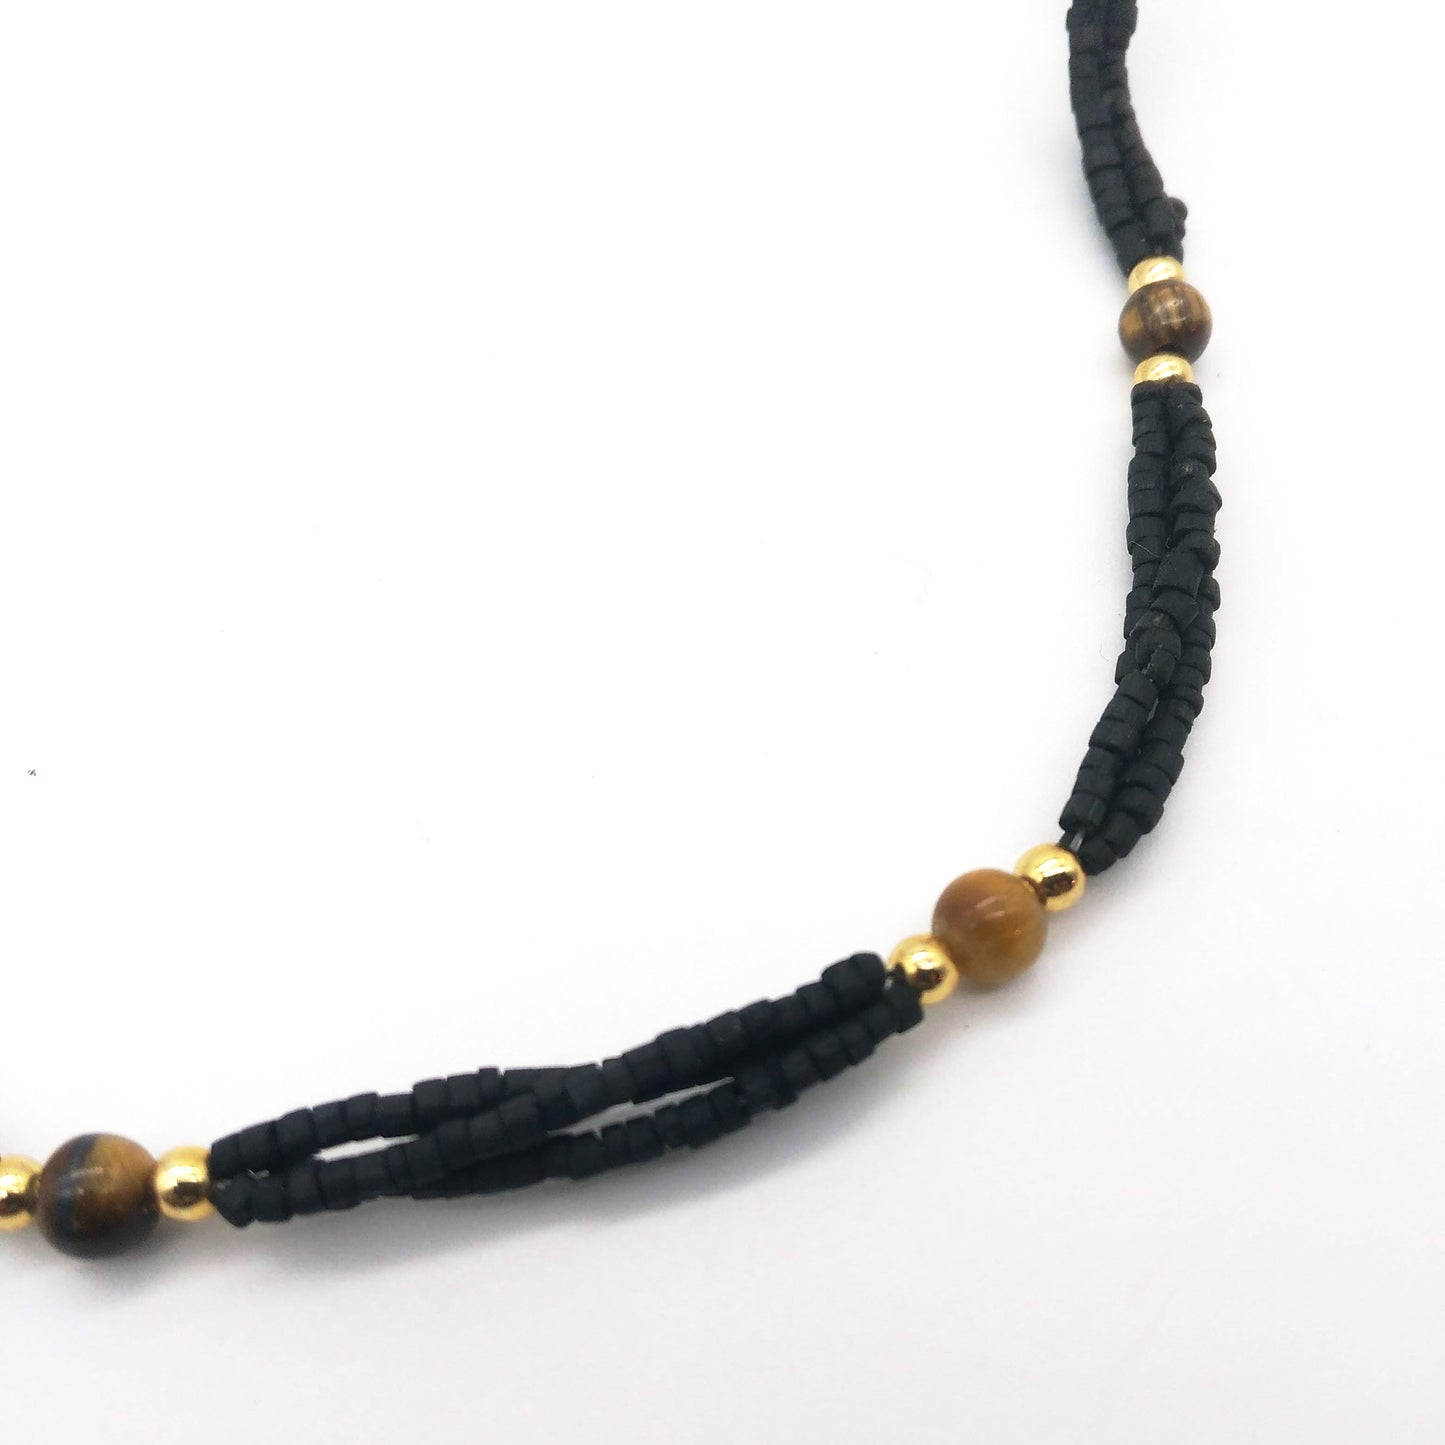 Tulsi Tulasi Necklace Black Colored Tulsi with Semi Precious Stones- Tiger Eye